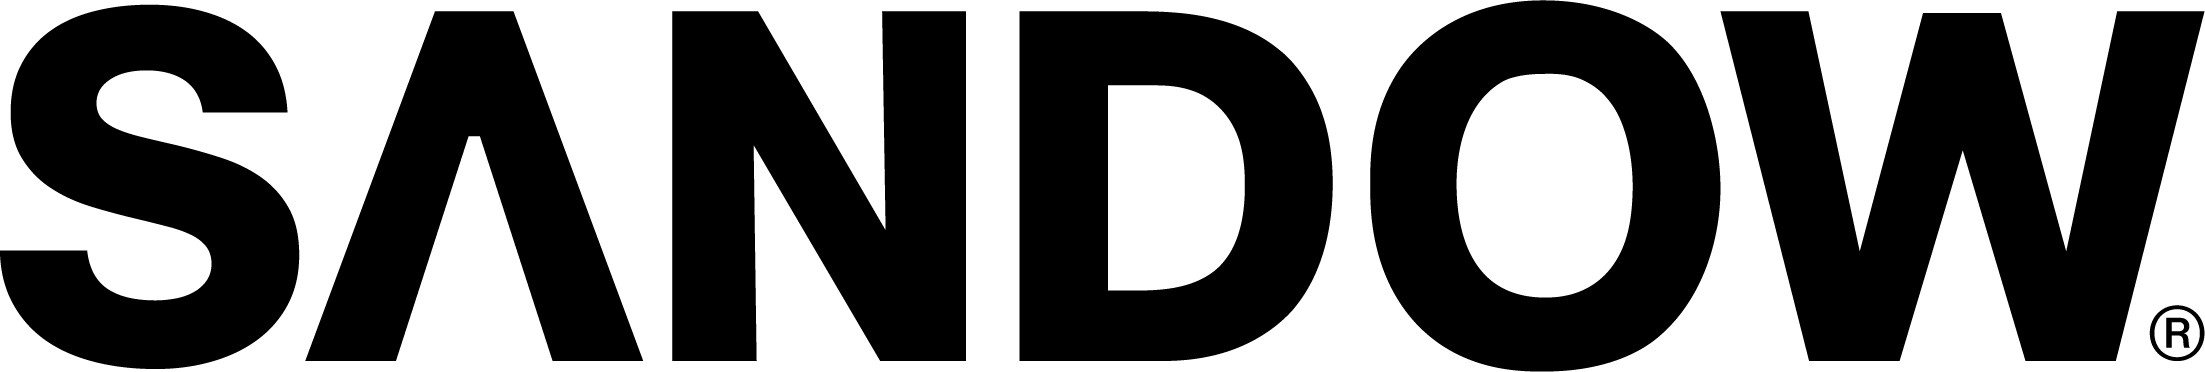 Sandow-logo (1)